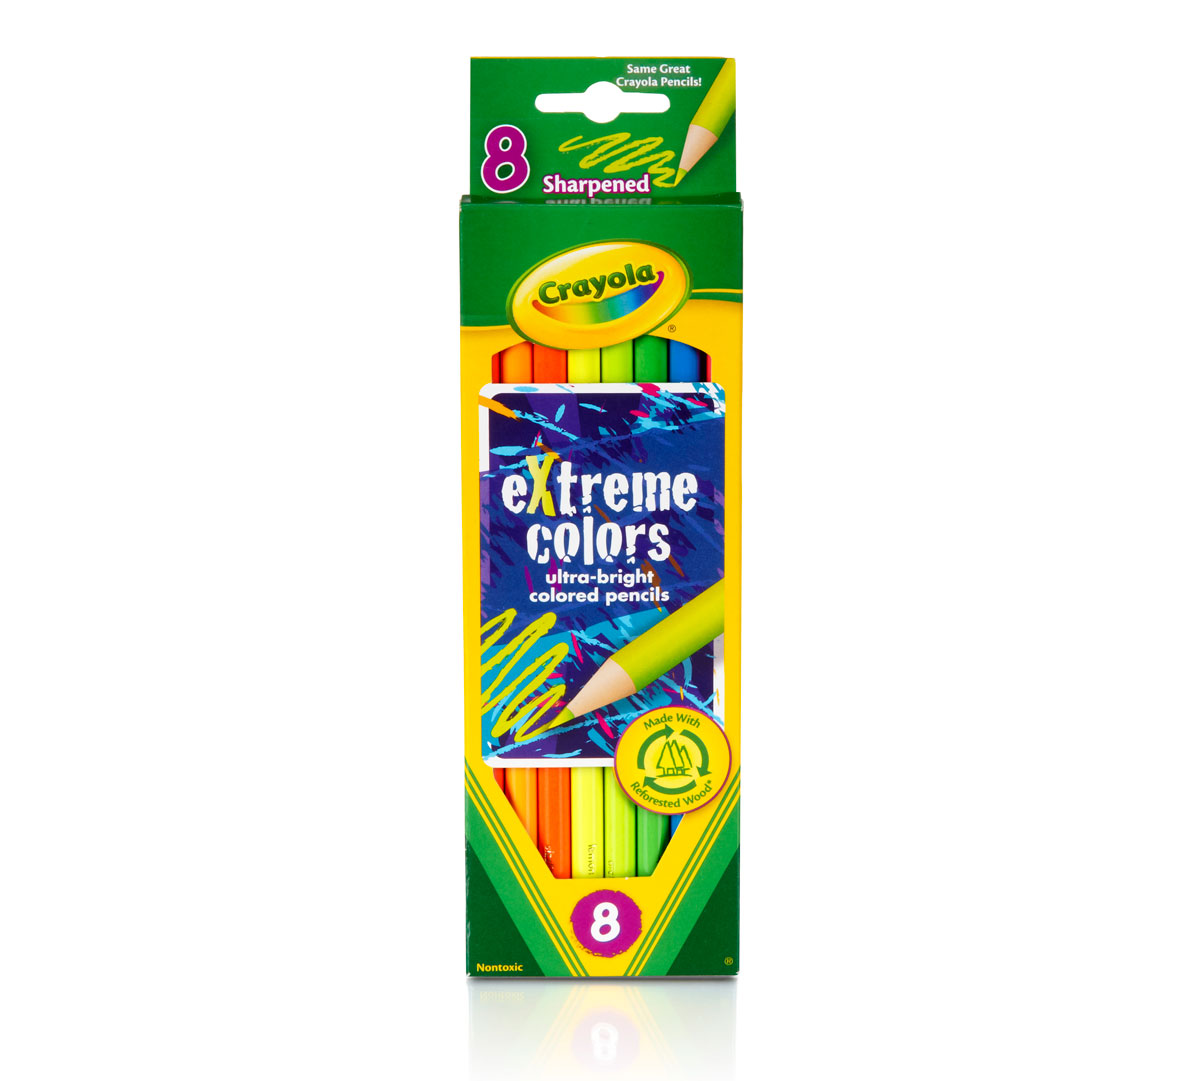 https://shop.crayola.com/on/demandware.static/-/Sites-crayola-storefront/default/dw239aac2c/images/68-1120-0-201_Colored-Pencils_Extreme-Colors_8ct_F1.jpg